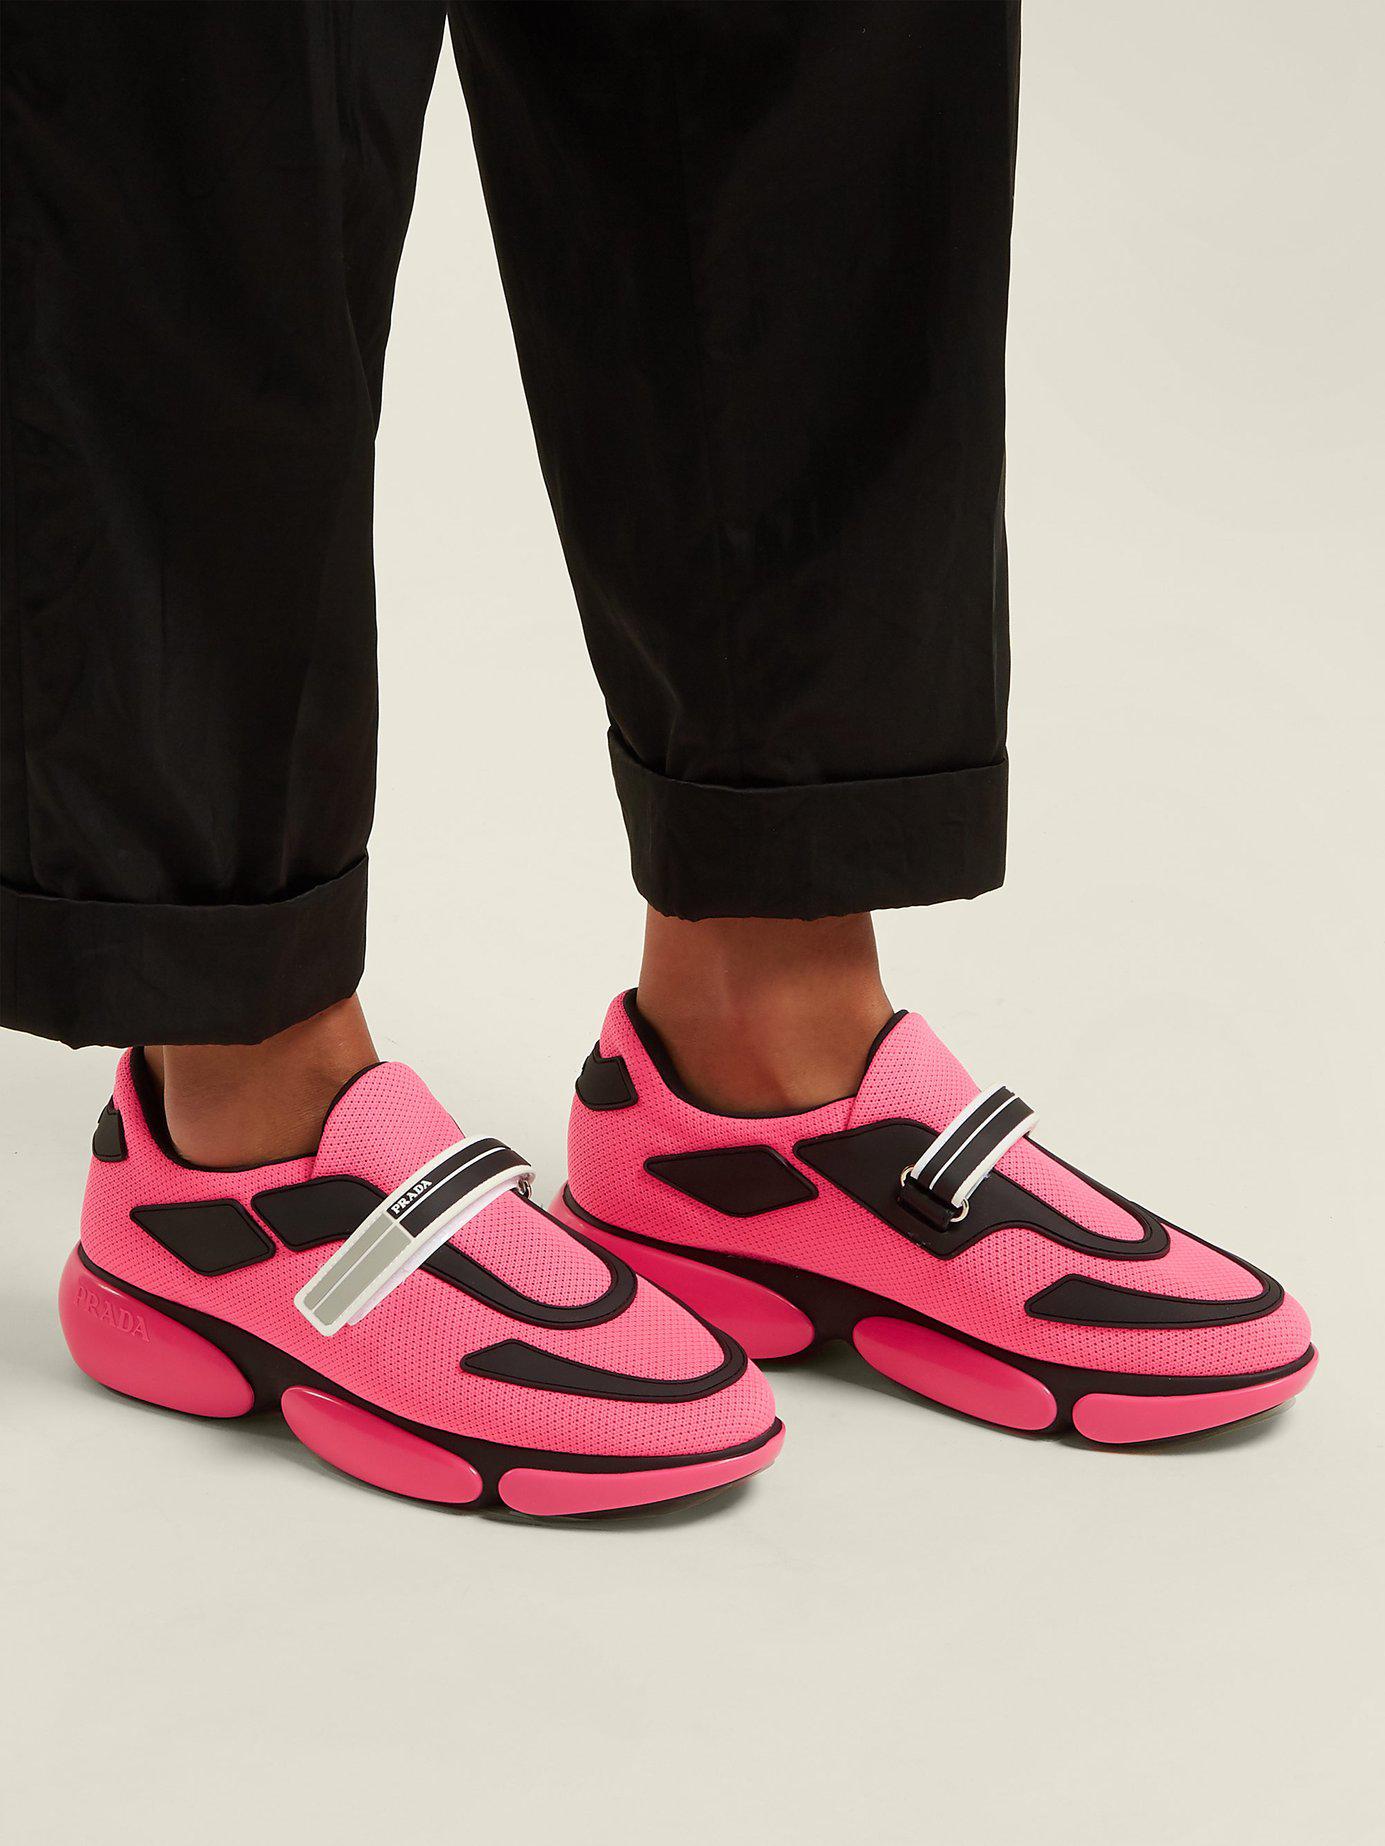 prada pink trainers